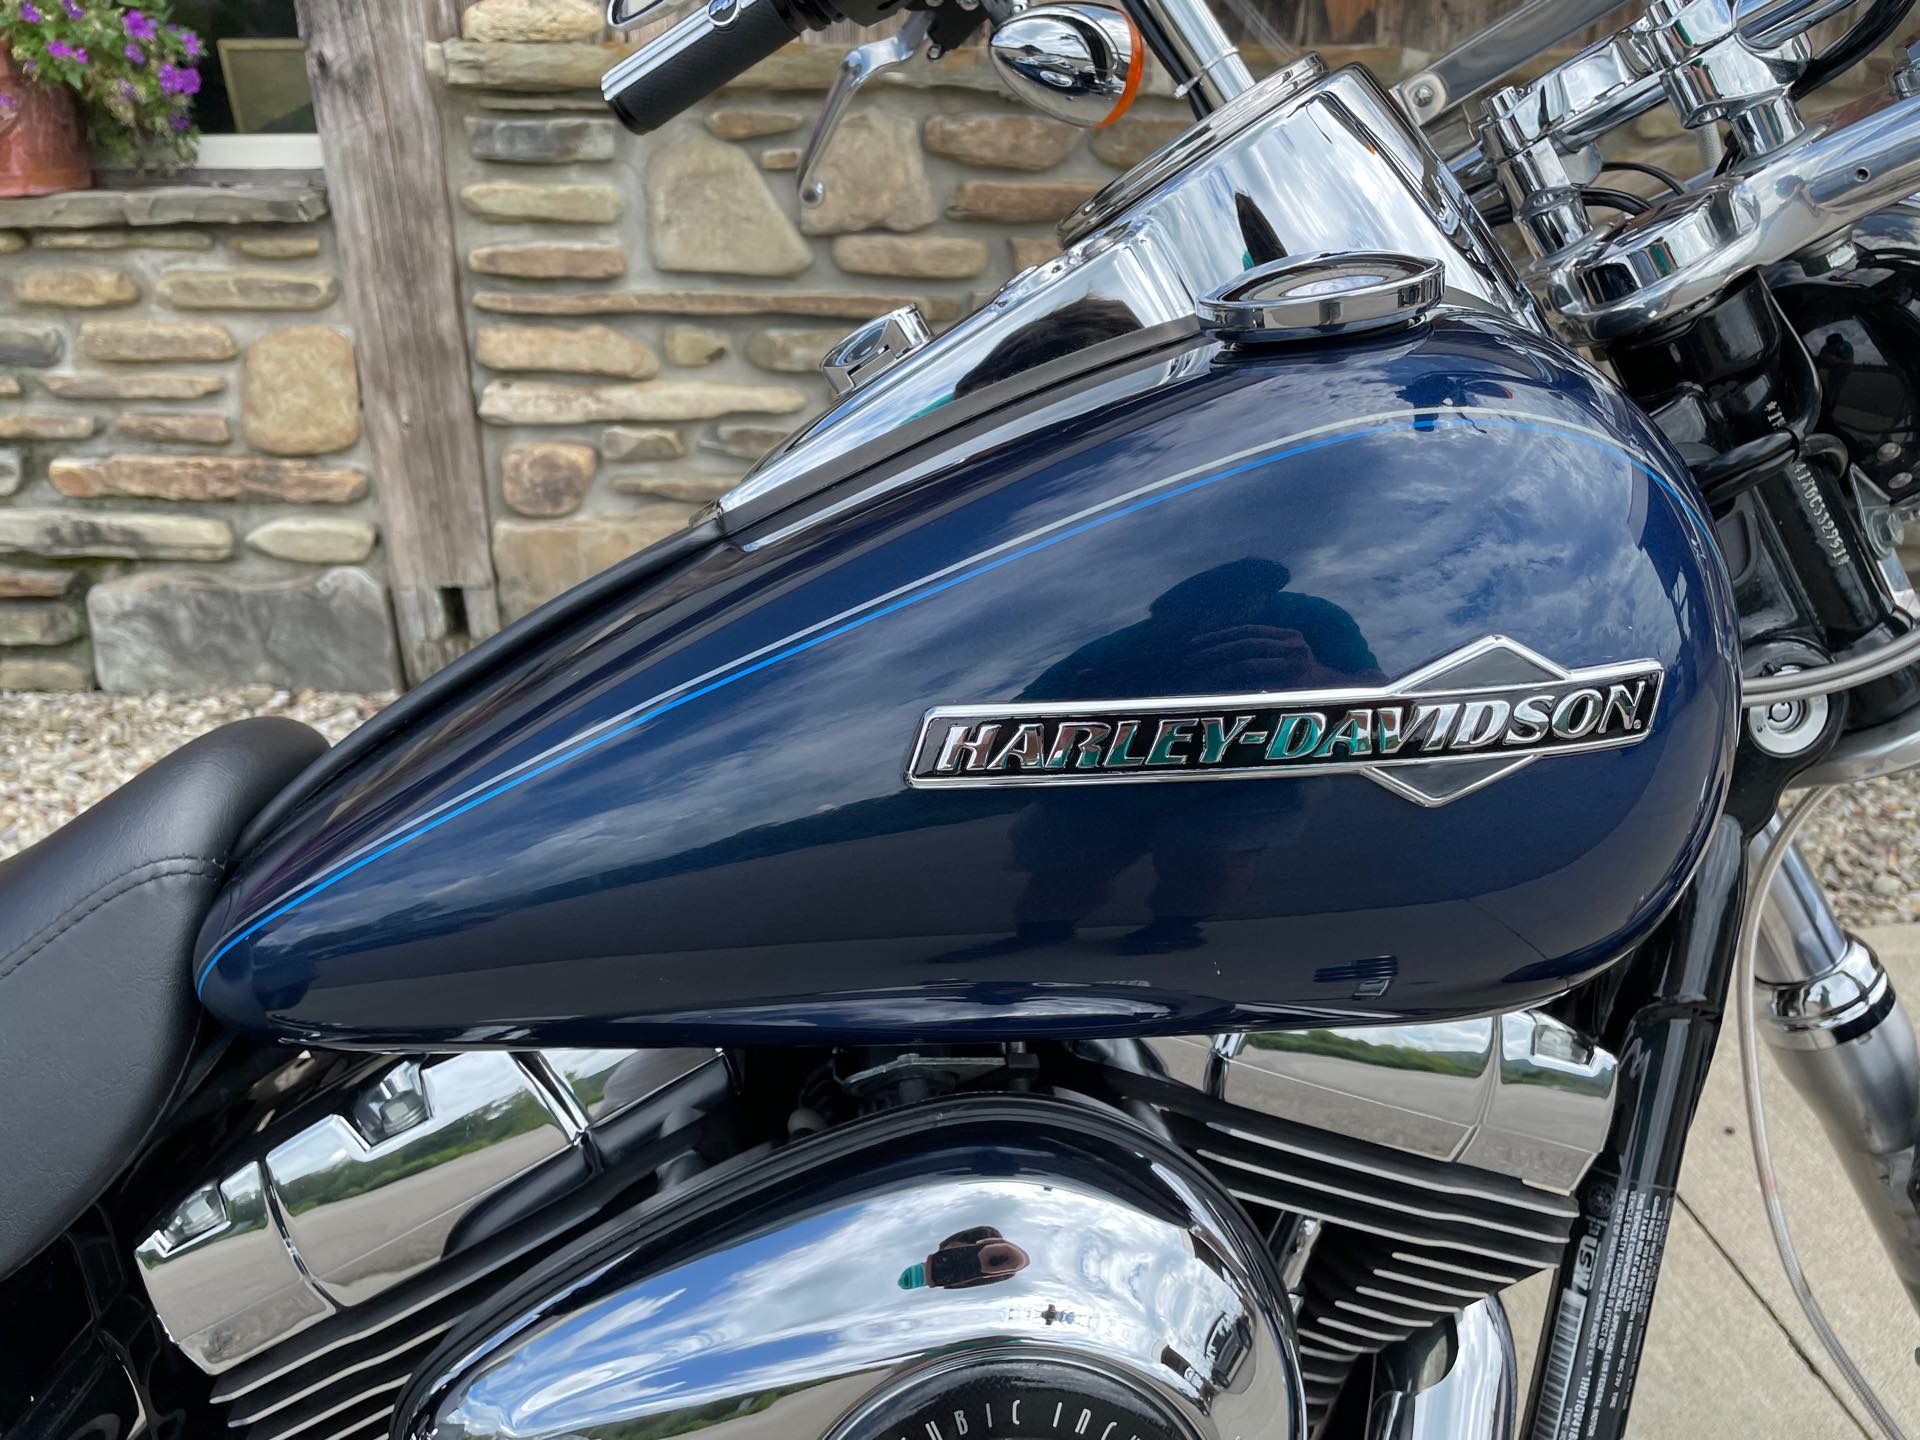 2013 Harley-Davidson Dyna Super Glide Custom at Arkport Cycles